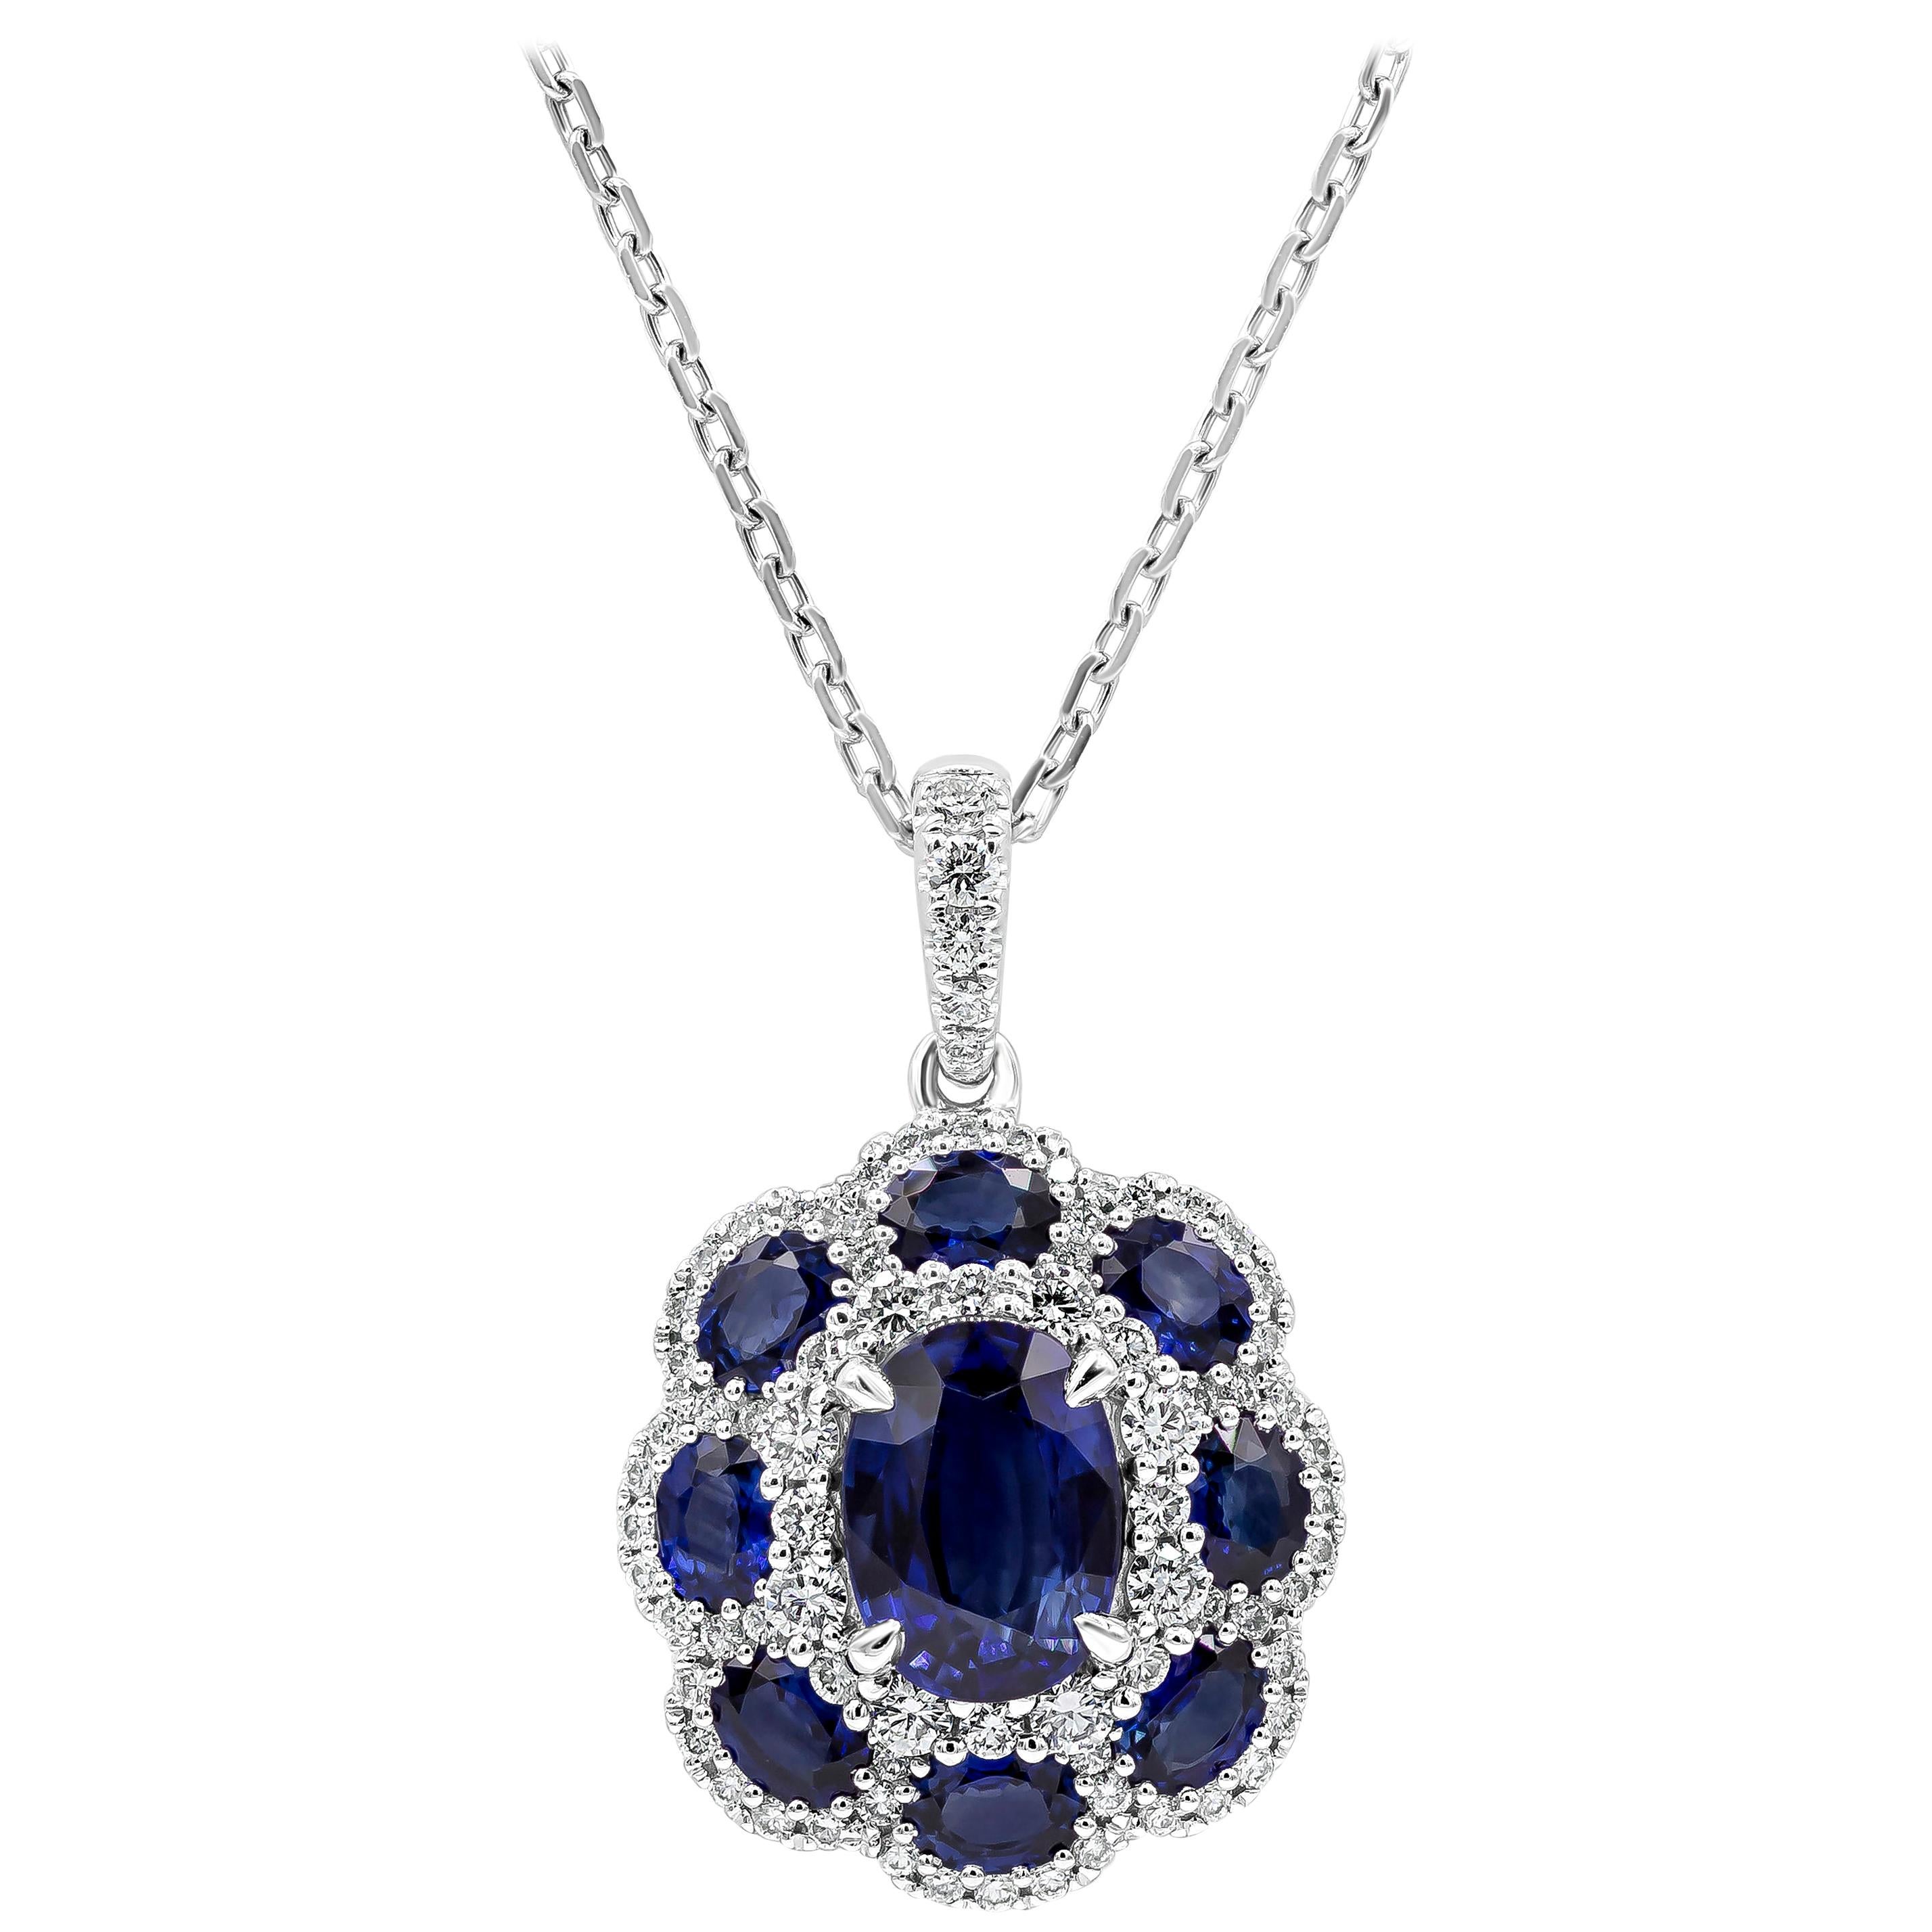 Roman Malakov 3.88 Carats Oval Cut Blue Sapphire and Diamond Pendant Necklace For Sale